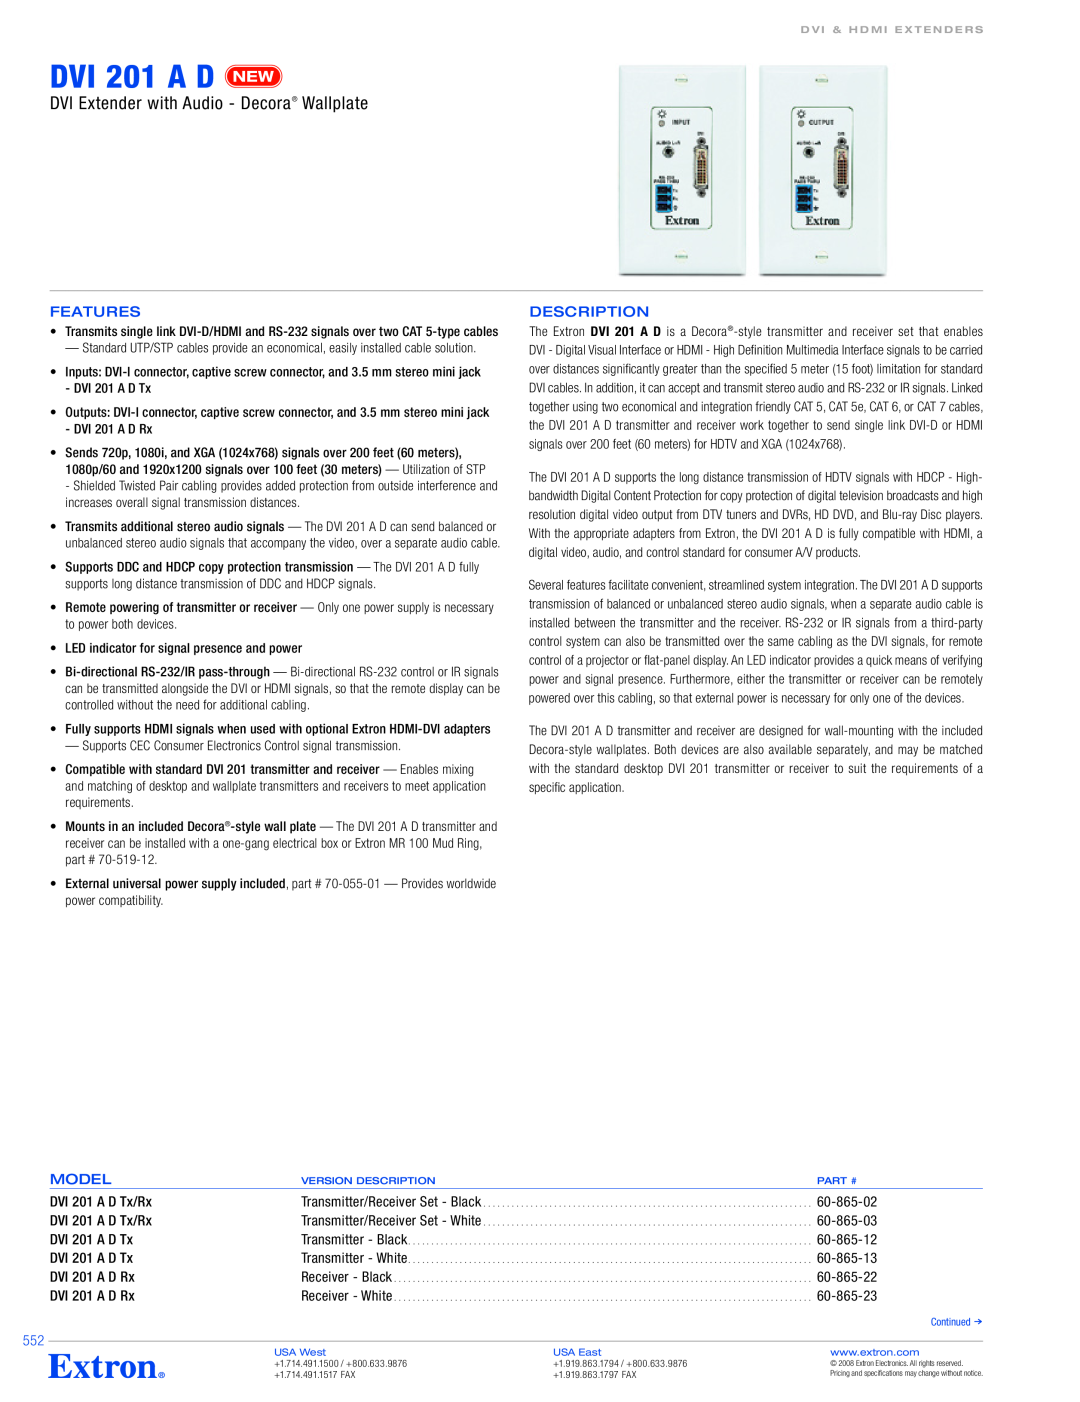 Extron electronic DVI 201 A D specifications Features, Description, Model, DVI Extender with Audio - Decora Wallplate 